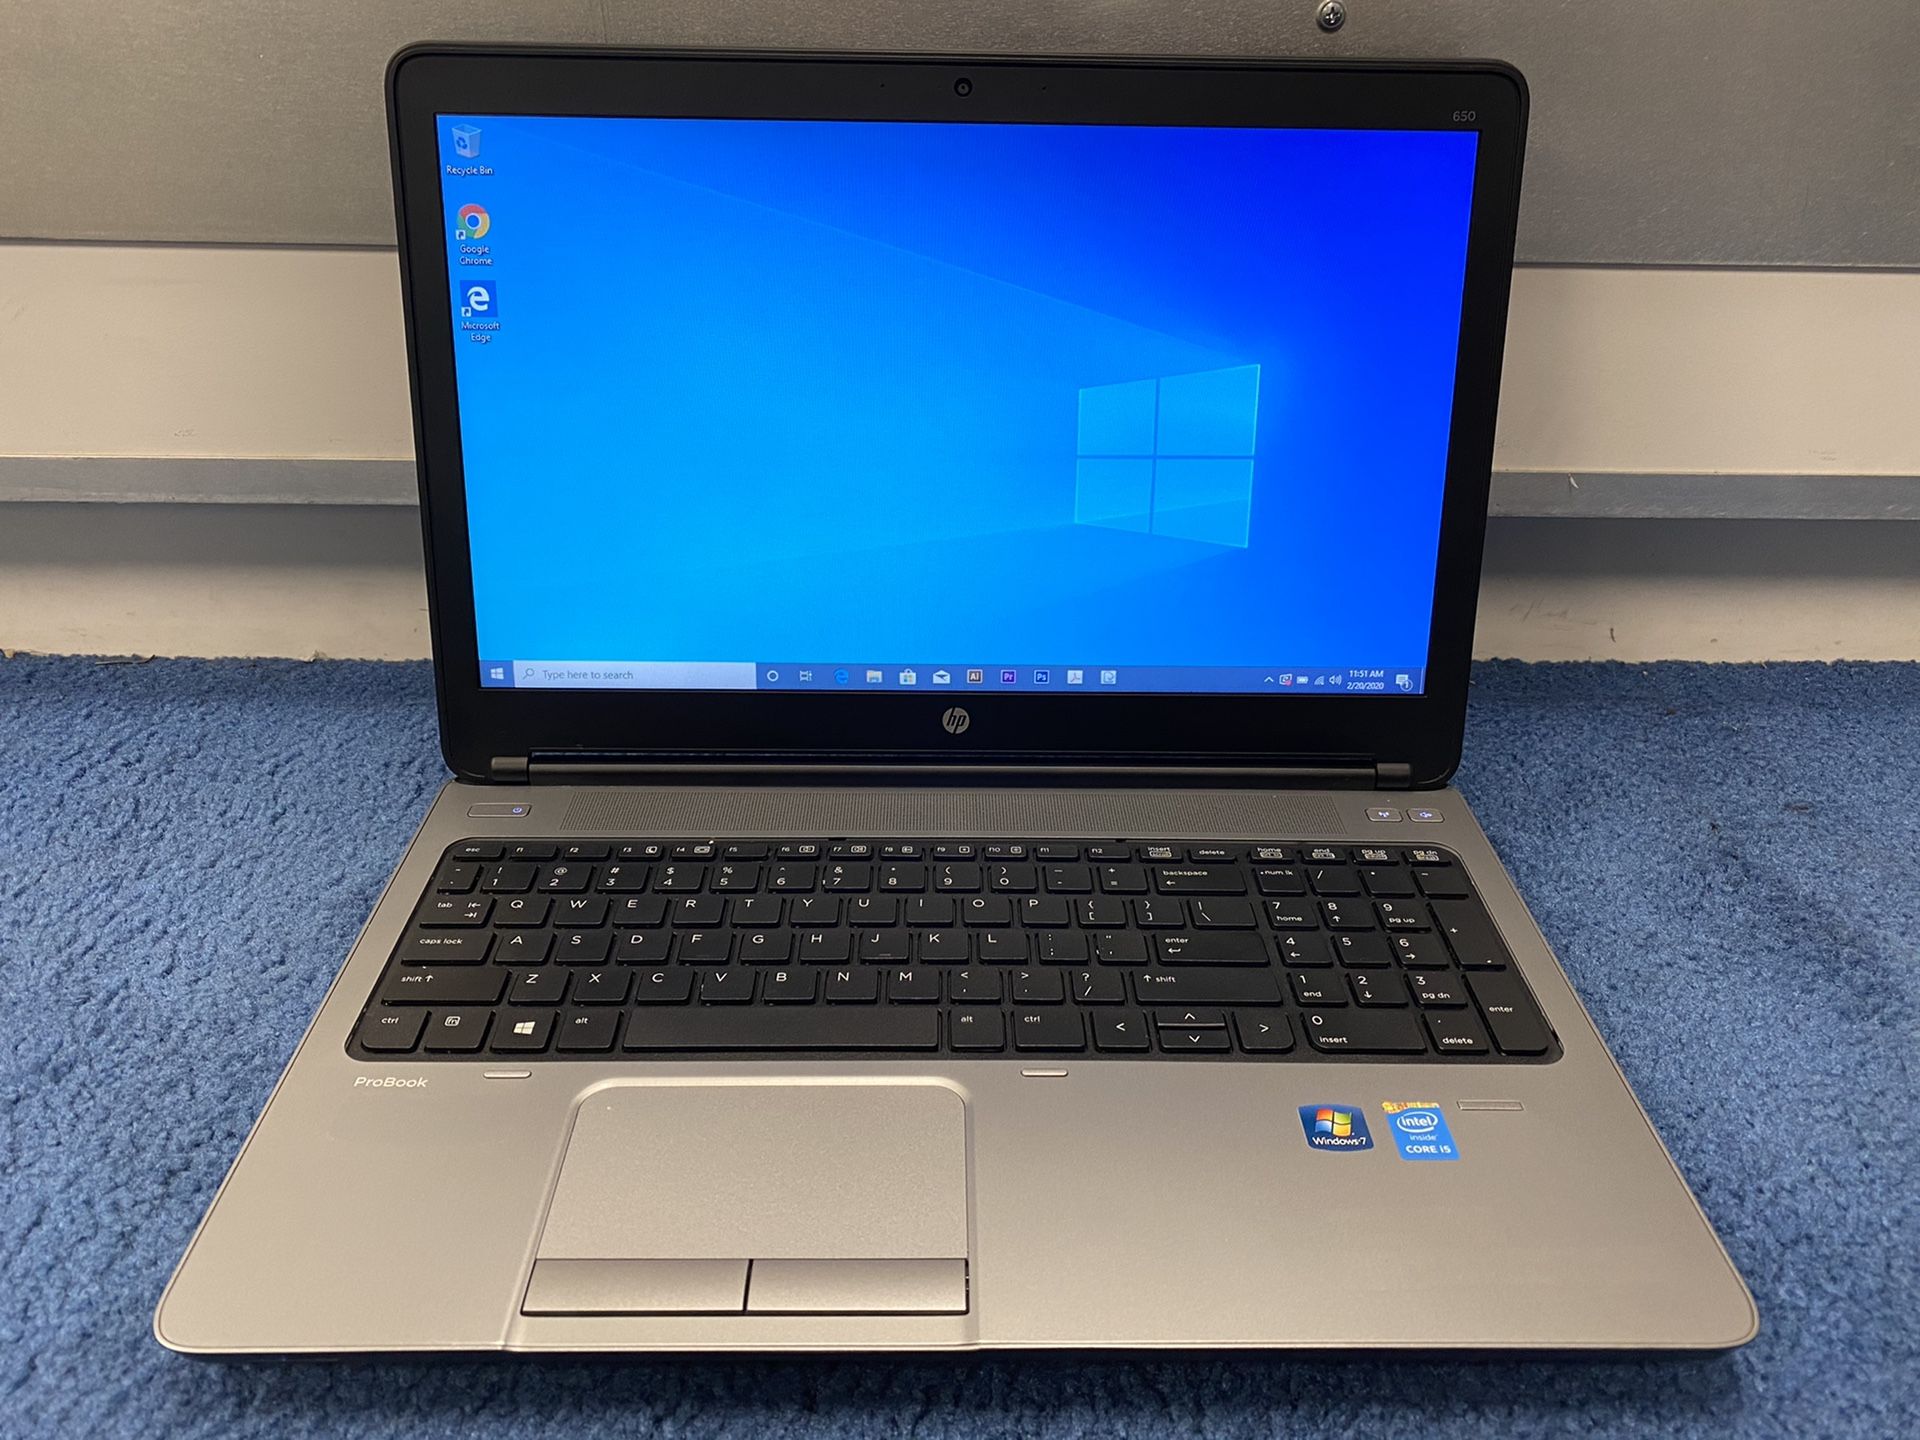 Hp Probook 650 i5 Laptop Windows 10 2019 w/ Adobe and Microsoft Office